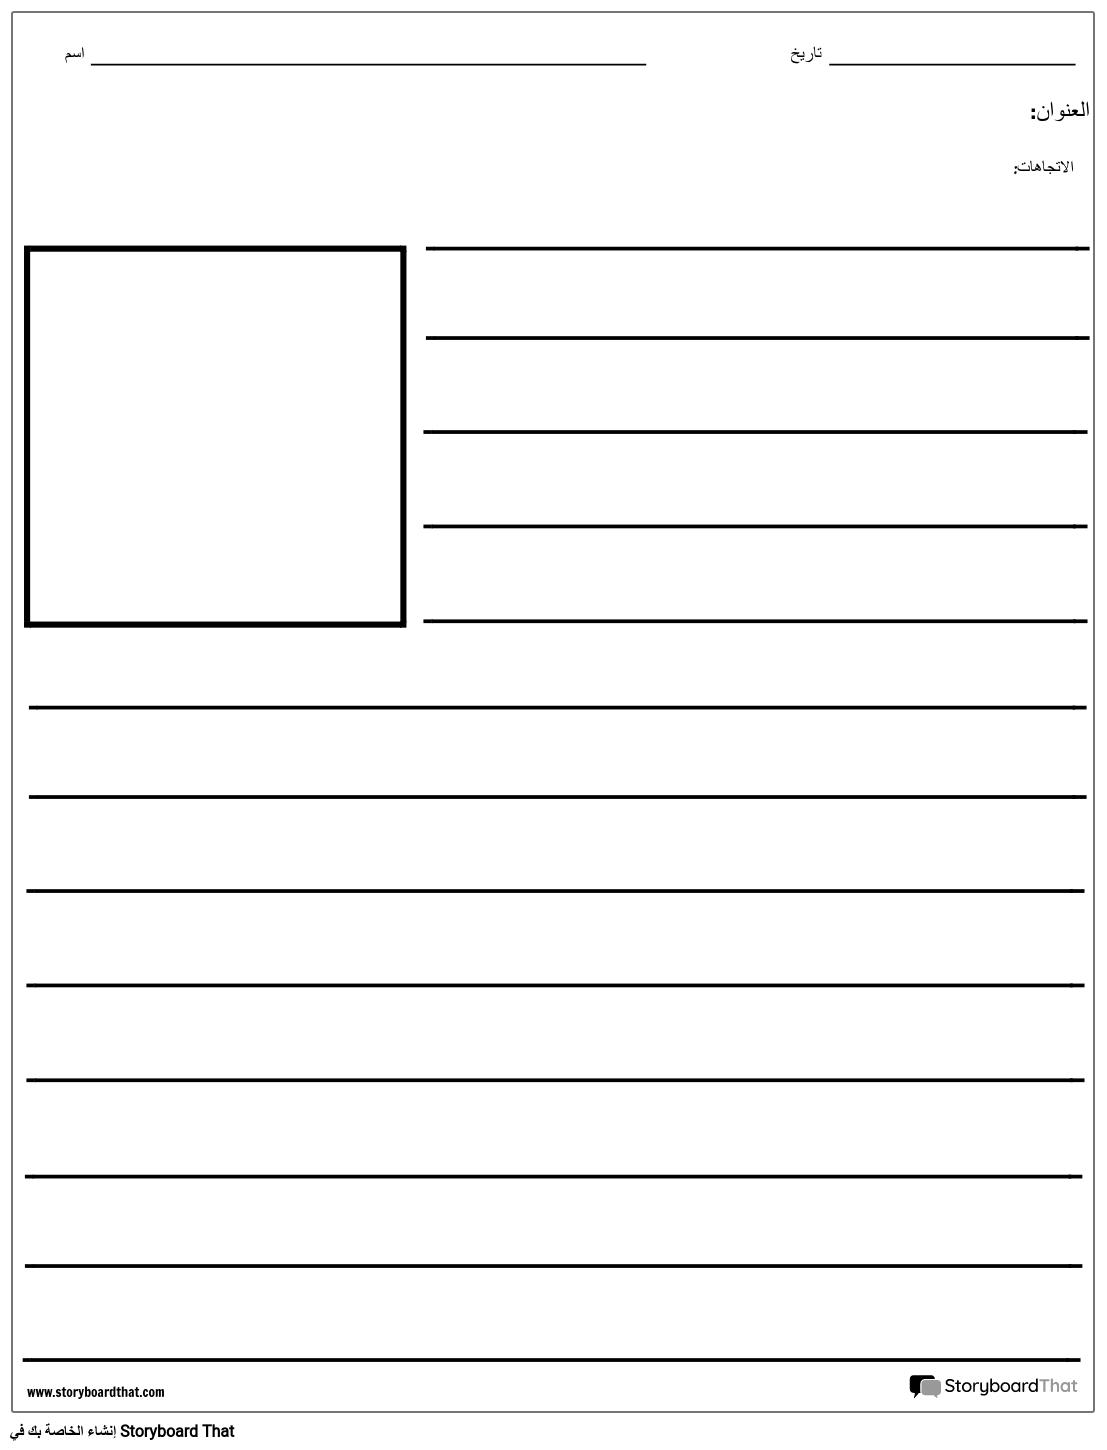 رسم توضيحي مربع